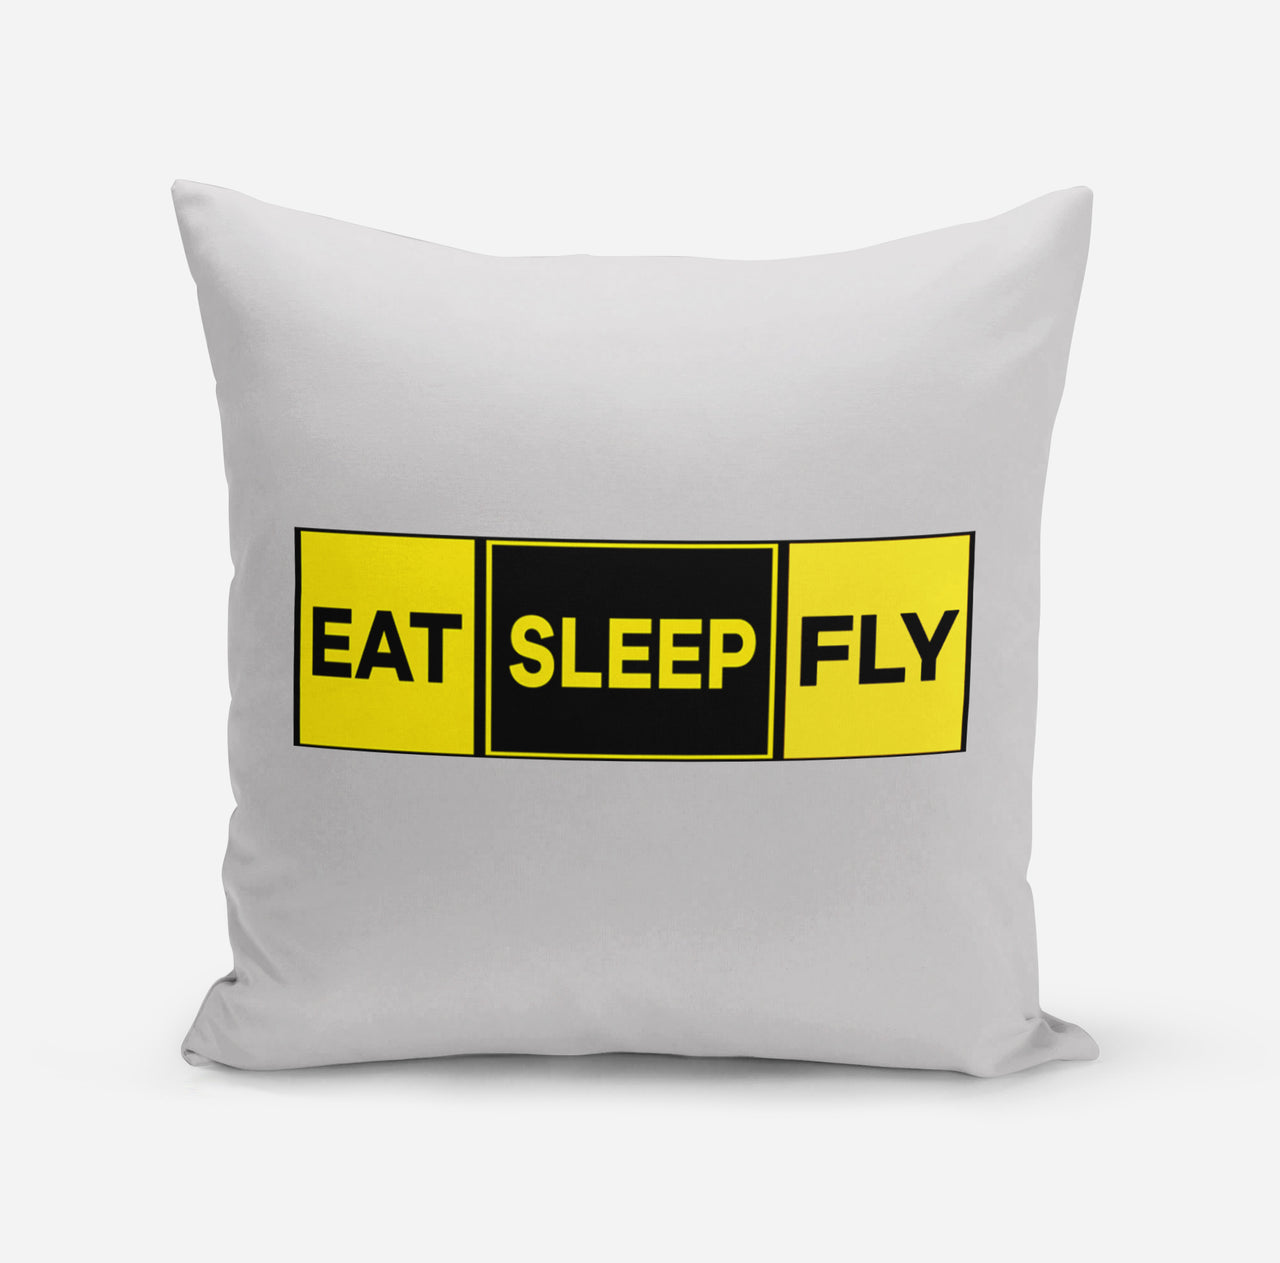 Eat Sleep Fly (Colourful) Designed Pillows